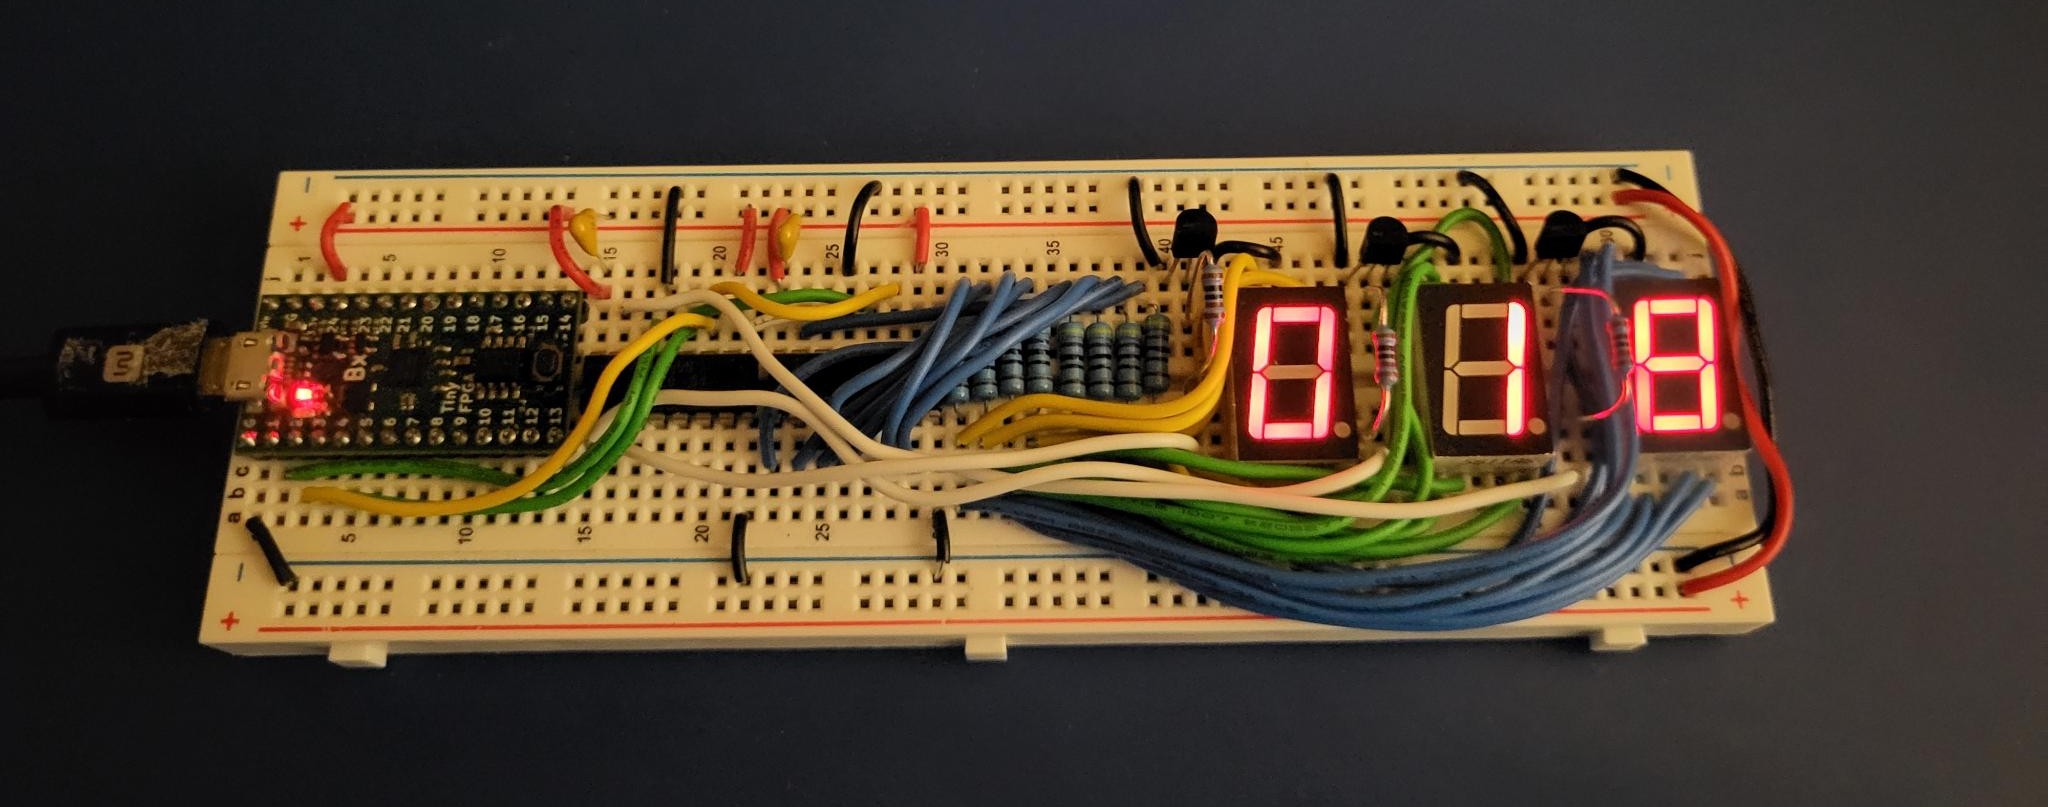 Time-Multiplexed Seven Segment Circuit